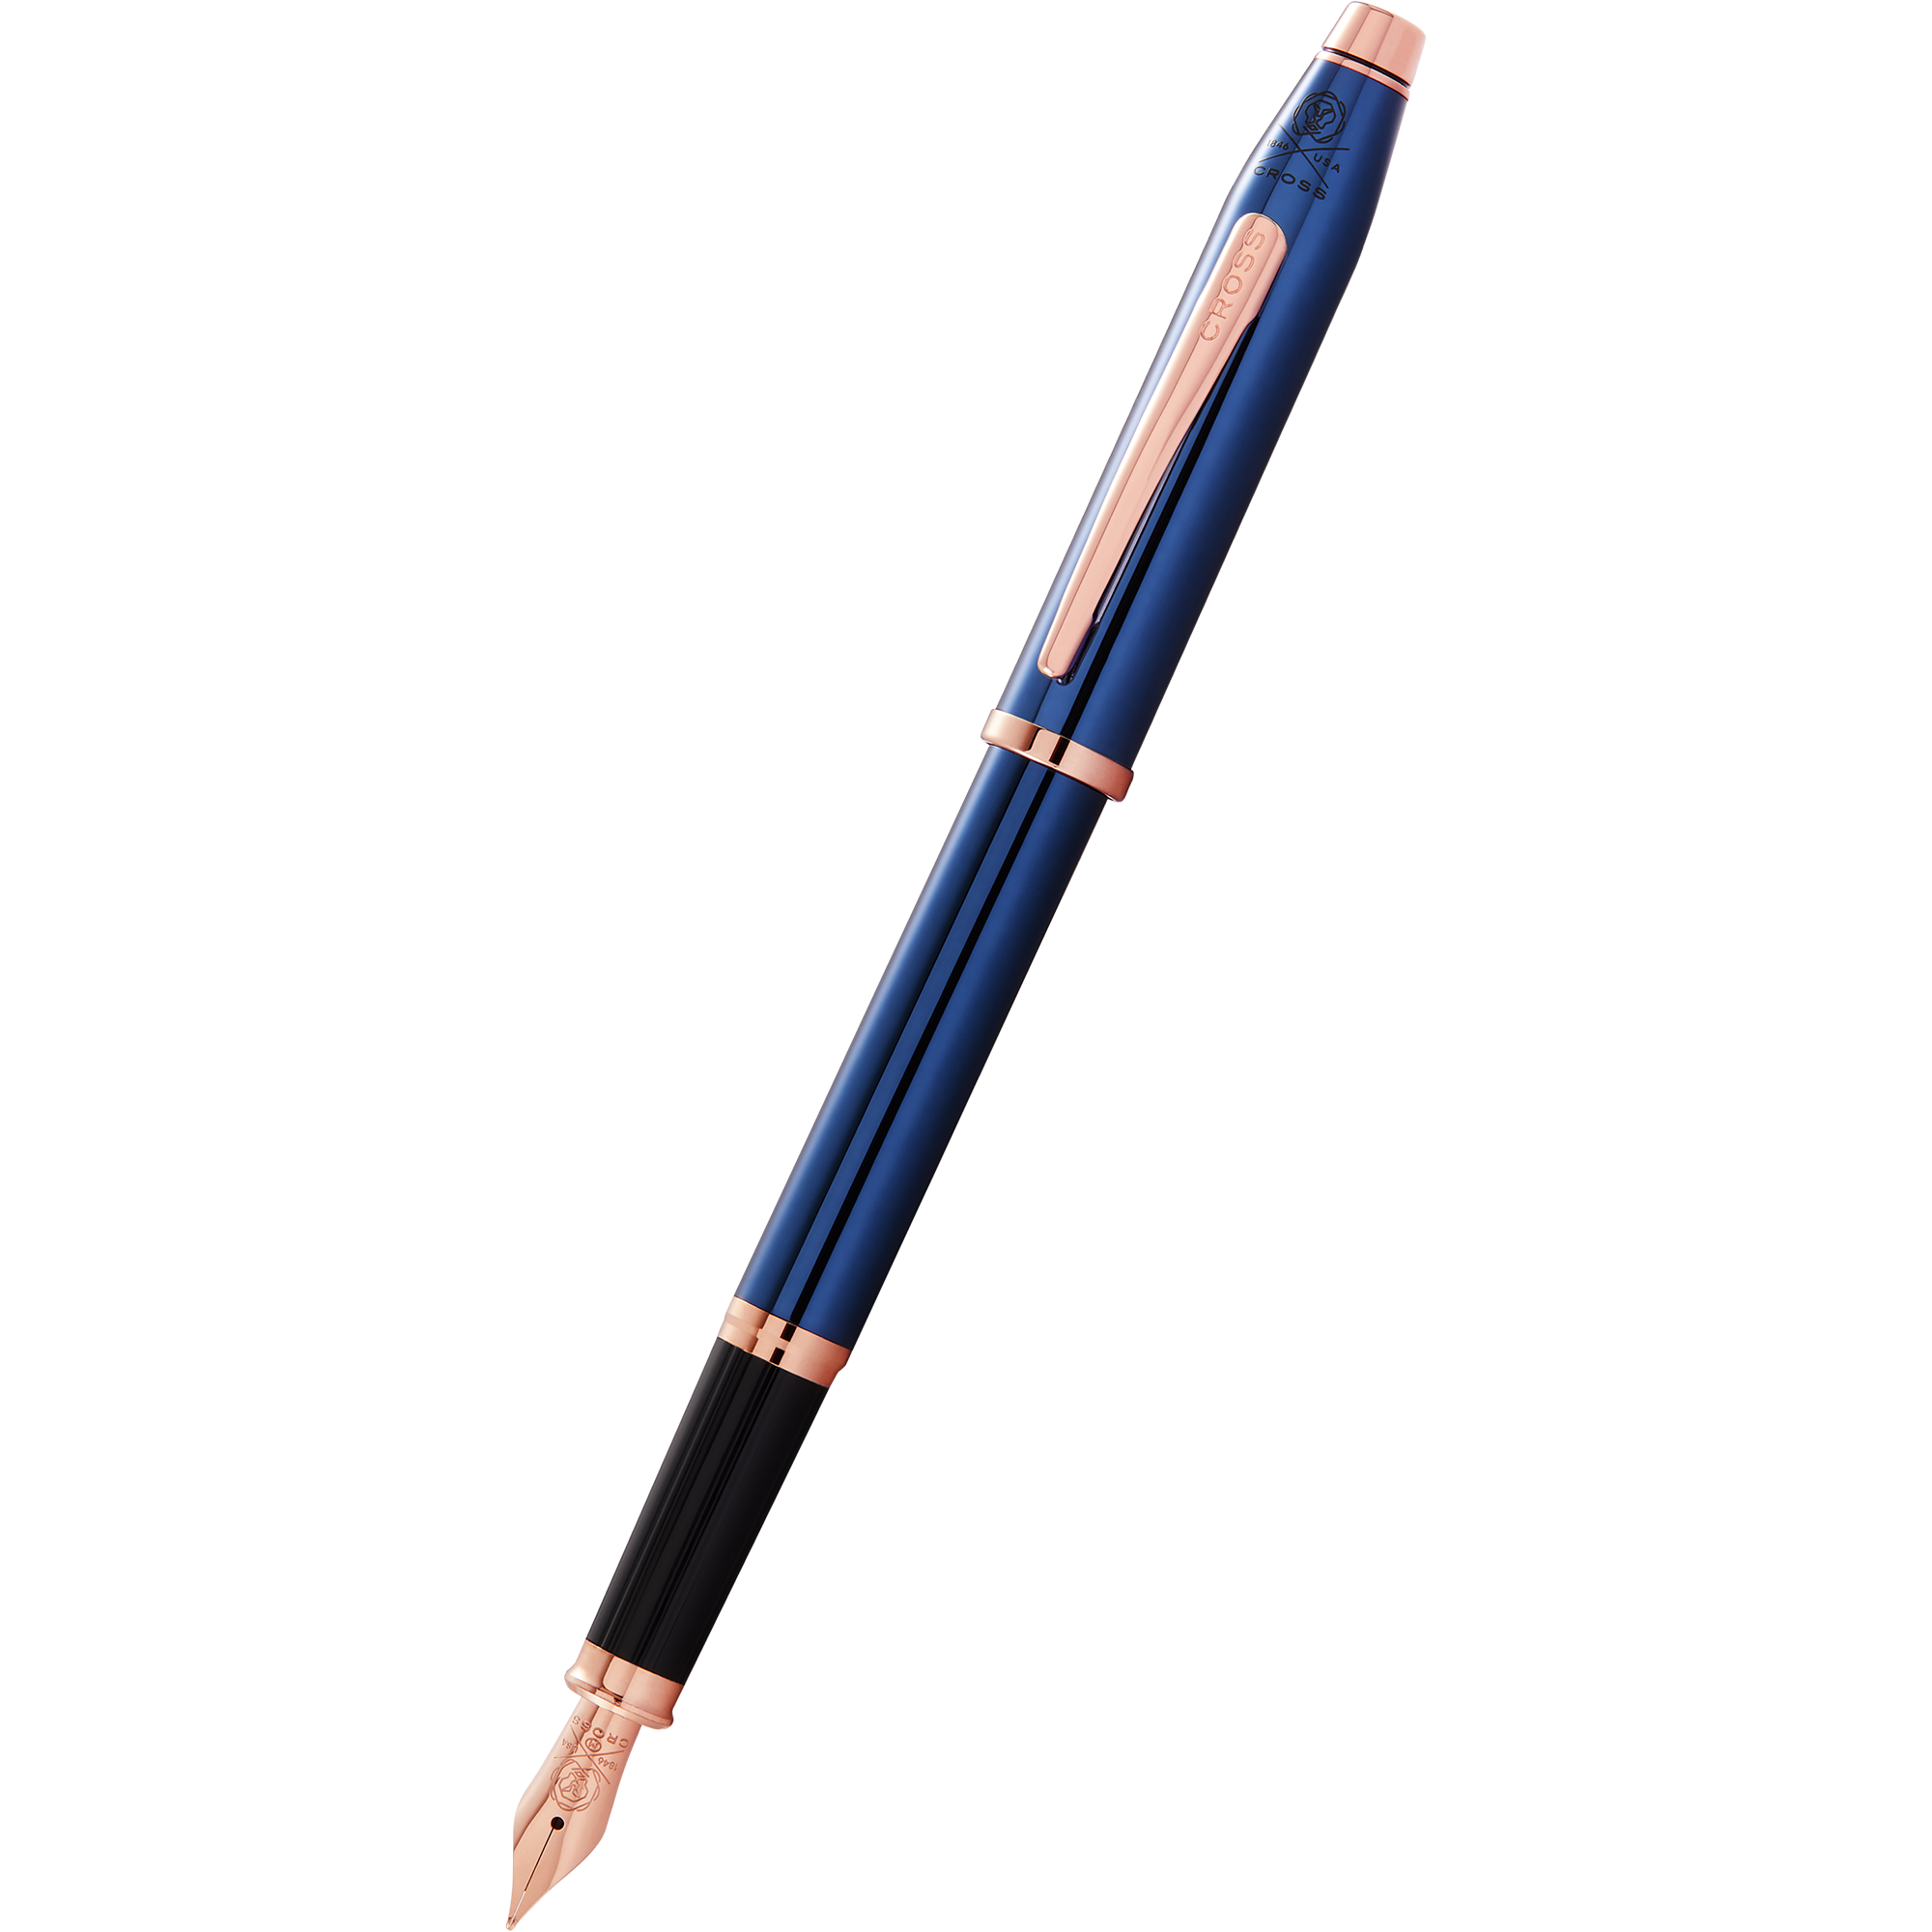 Cross Century II Fountain Pen - Translucent Blue-Pen Boutique Ltd